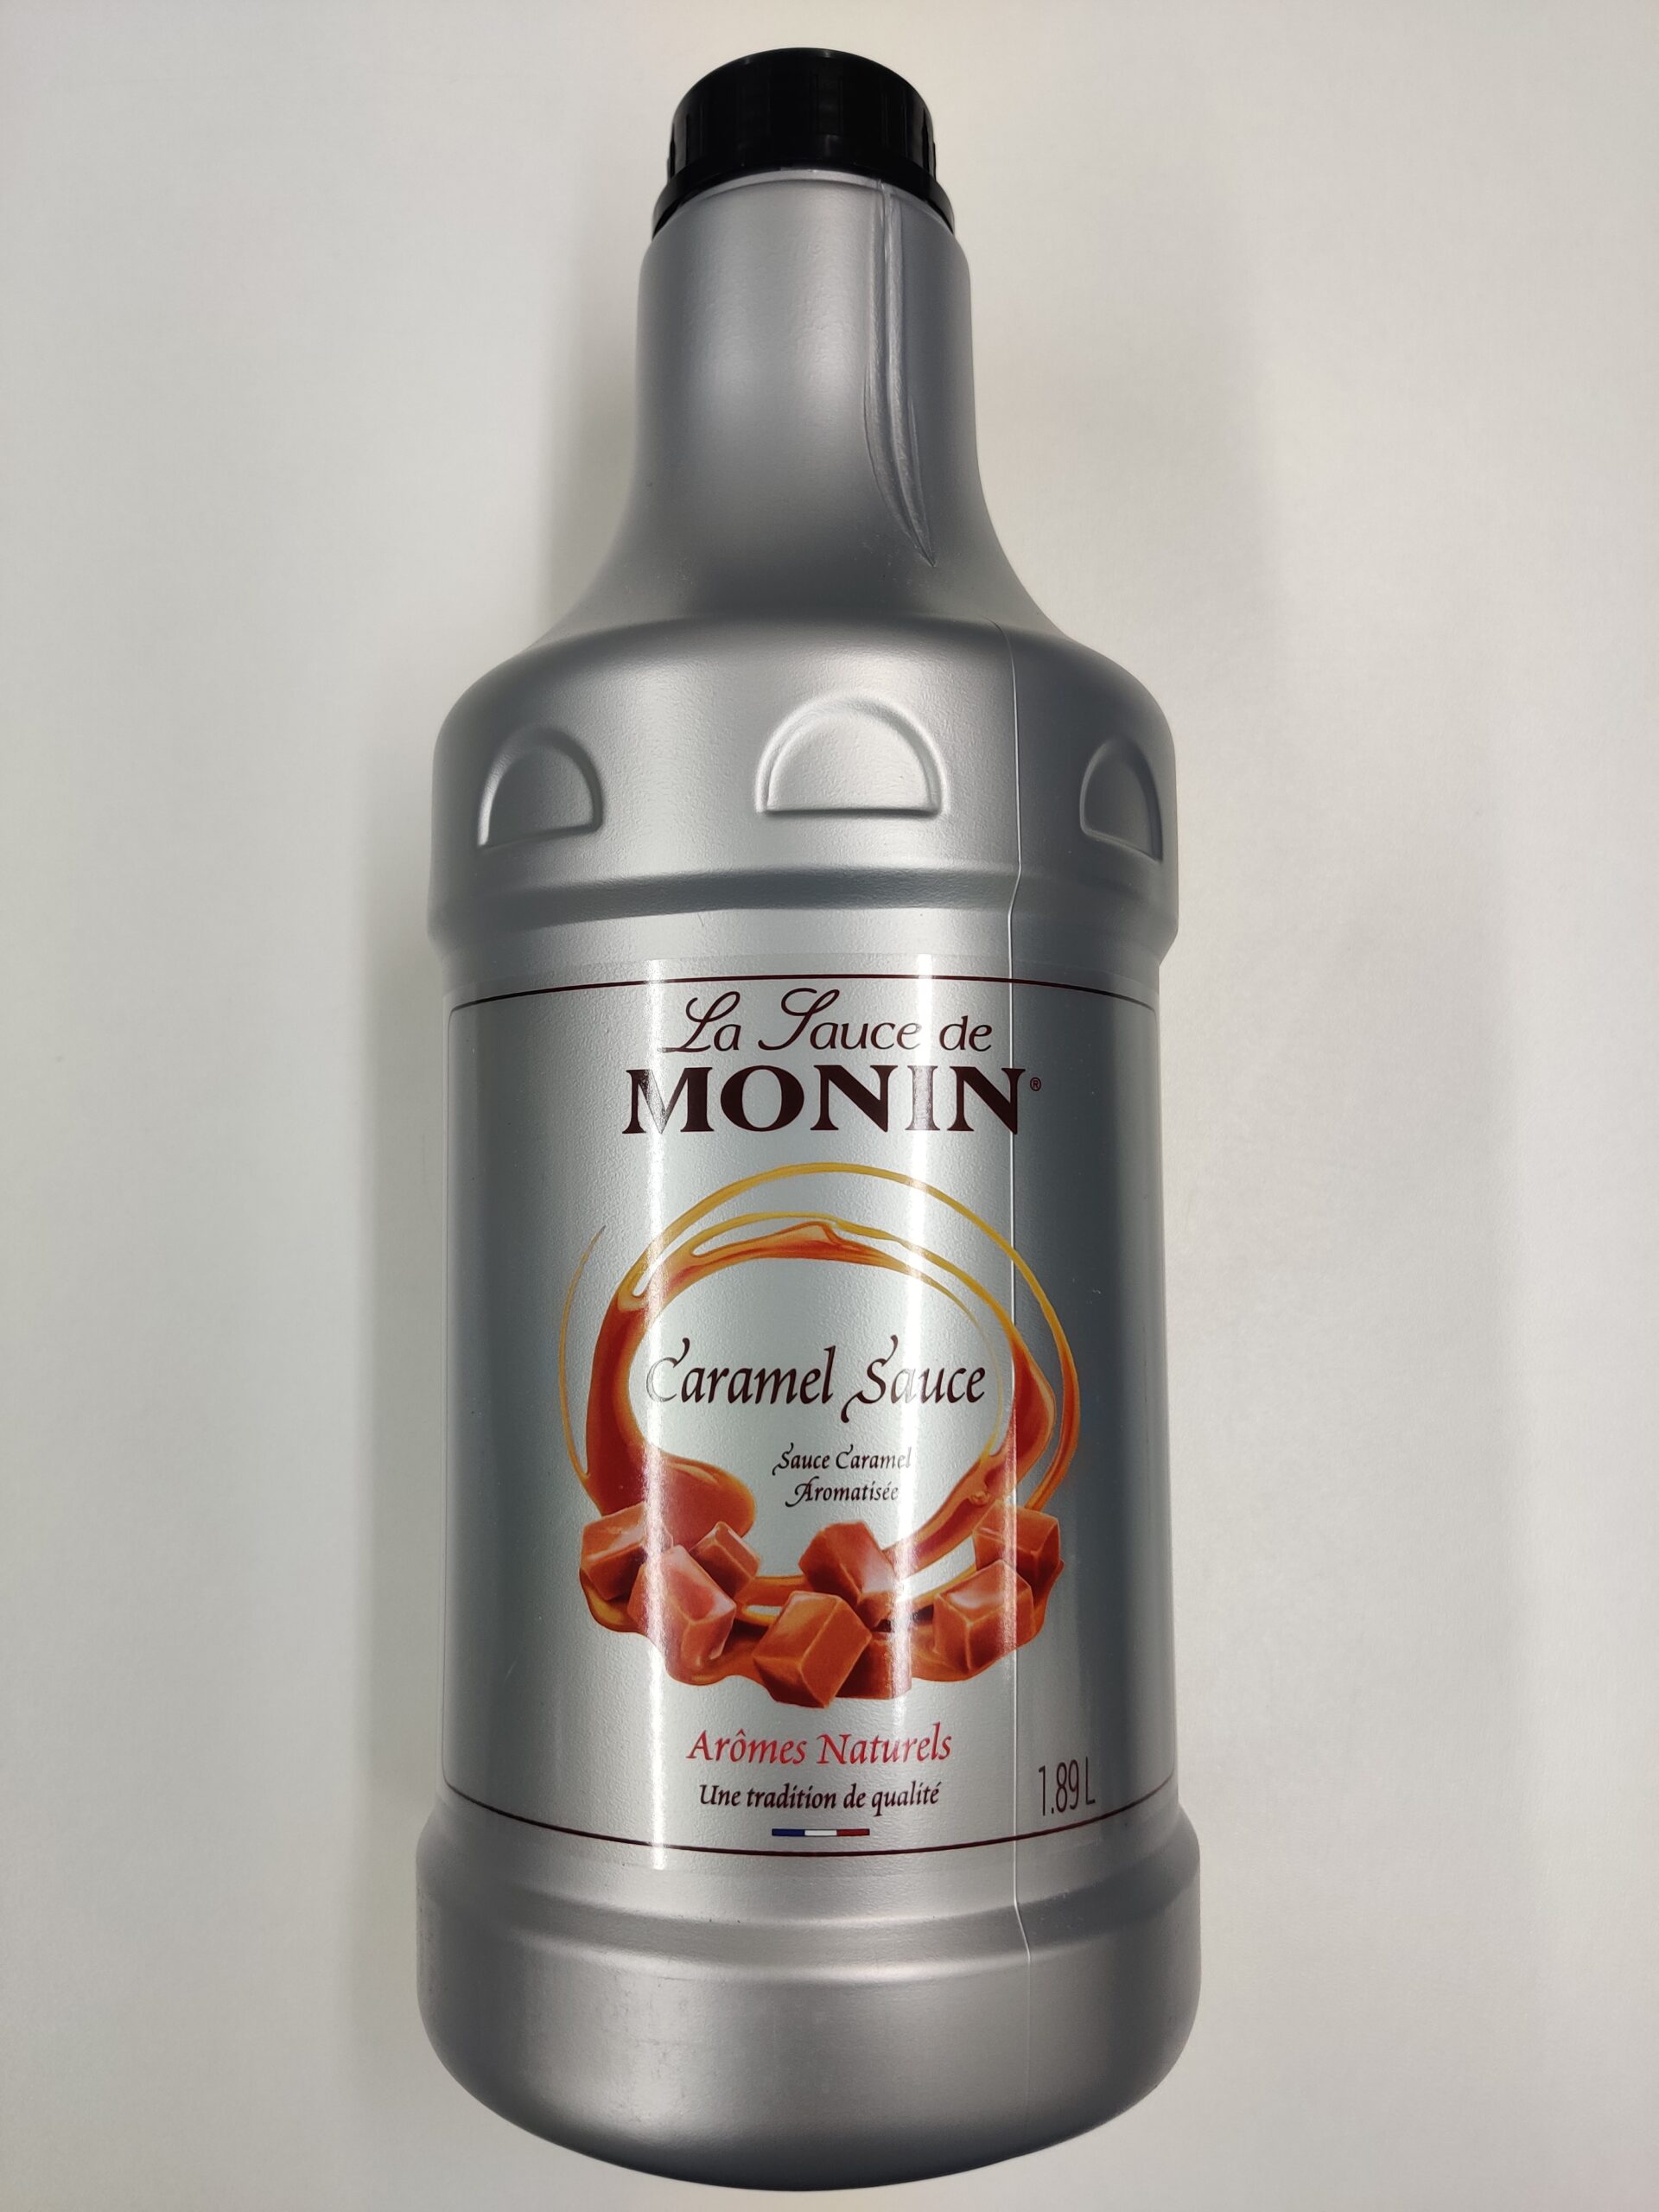 Monin Caramel Sauce 1.89L - Tapside Scotland, UK